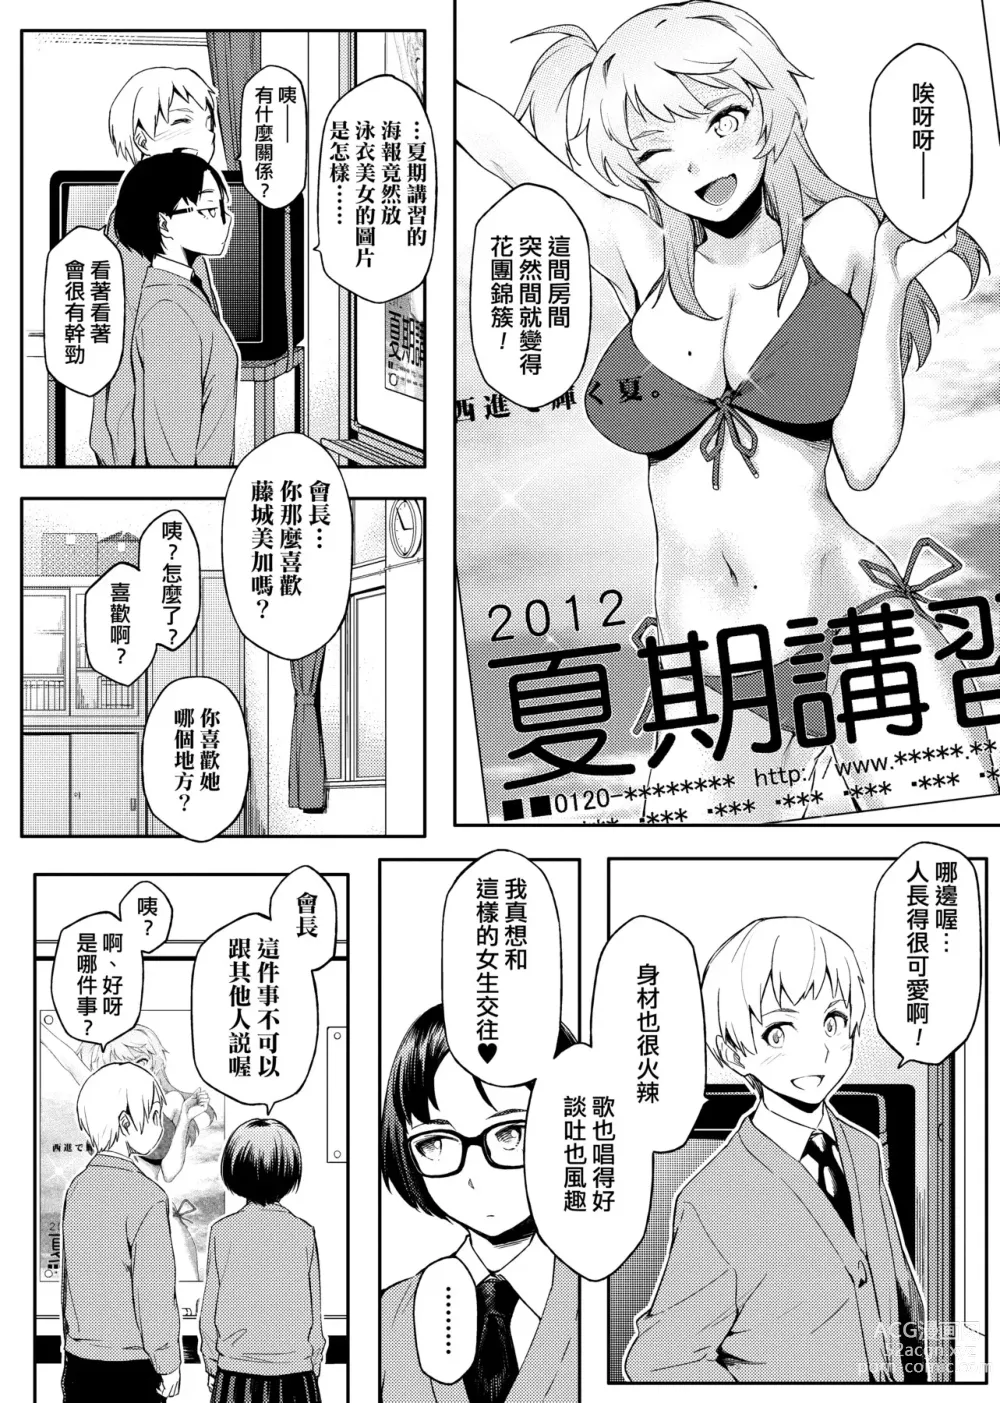 Page 215 of manga Natsu Koi Ota Girl - What Brings You to Japan?